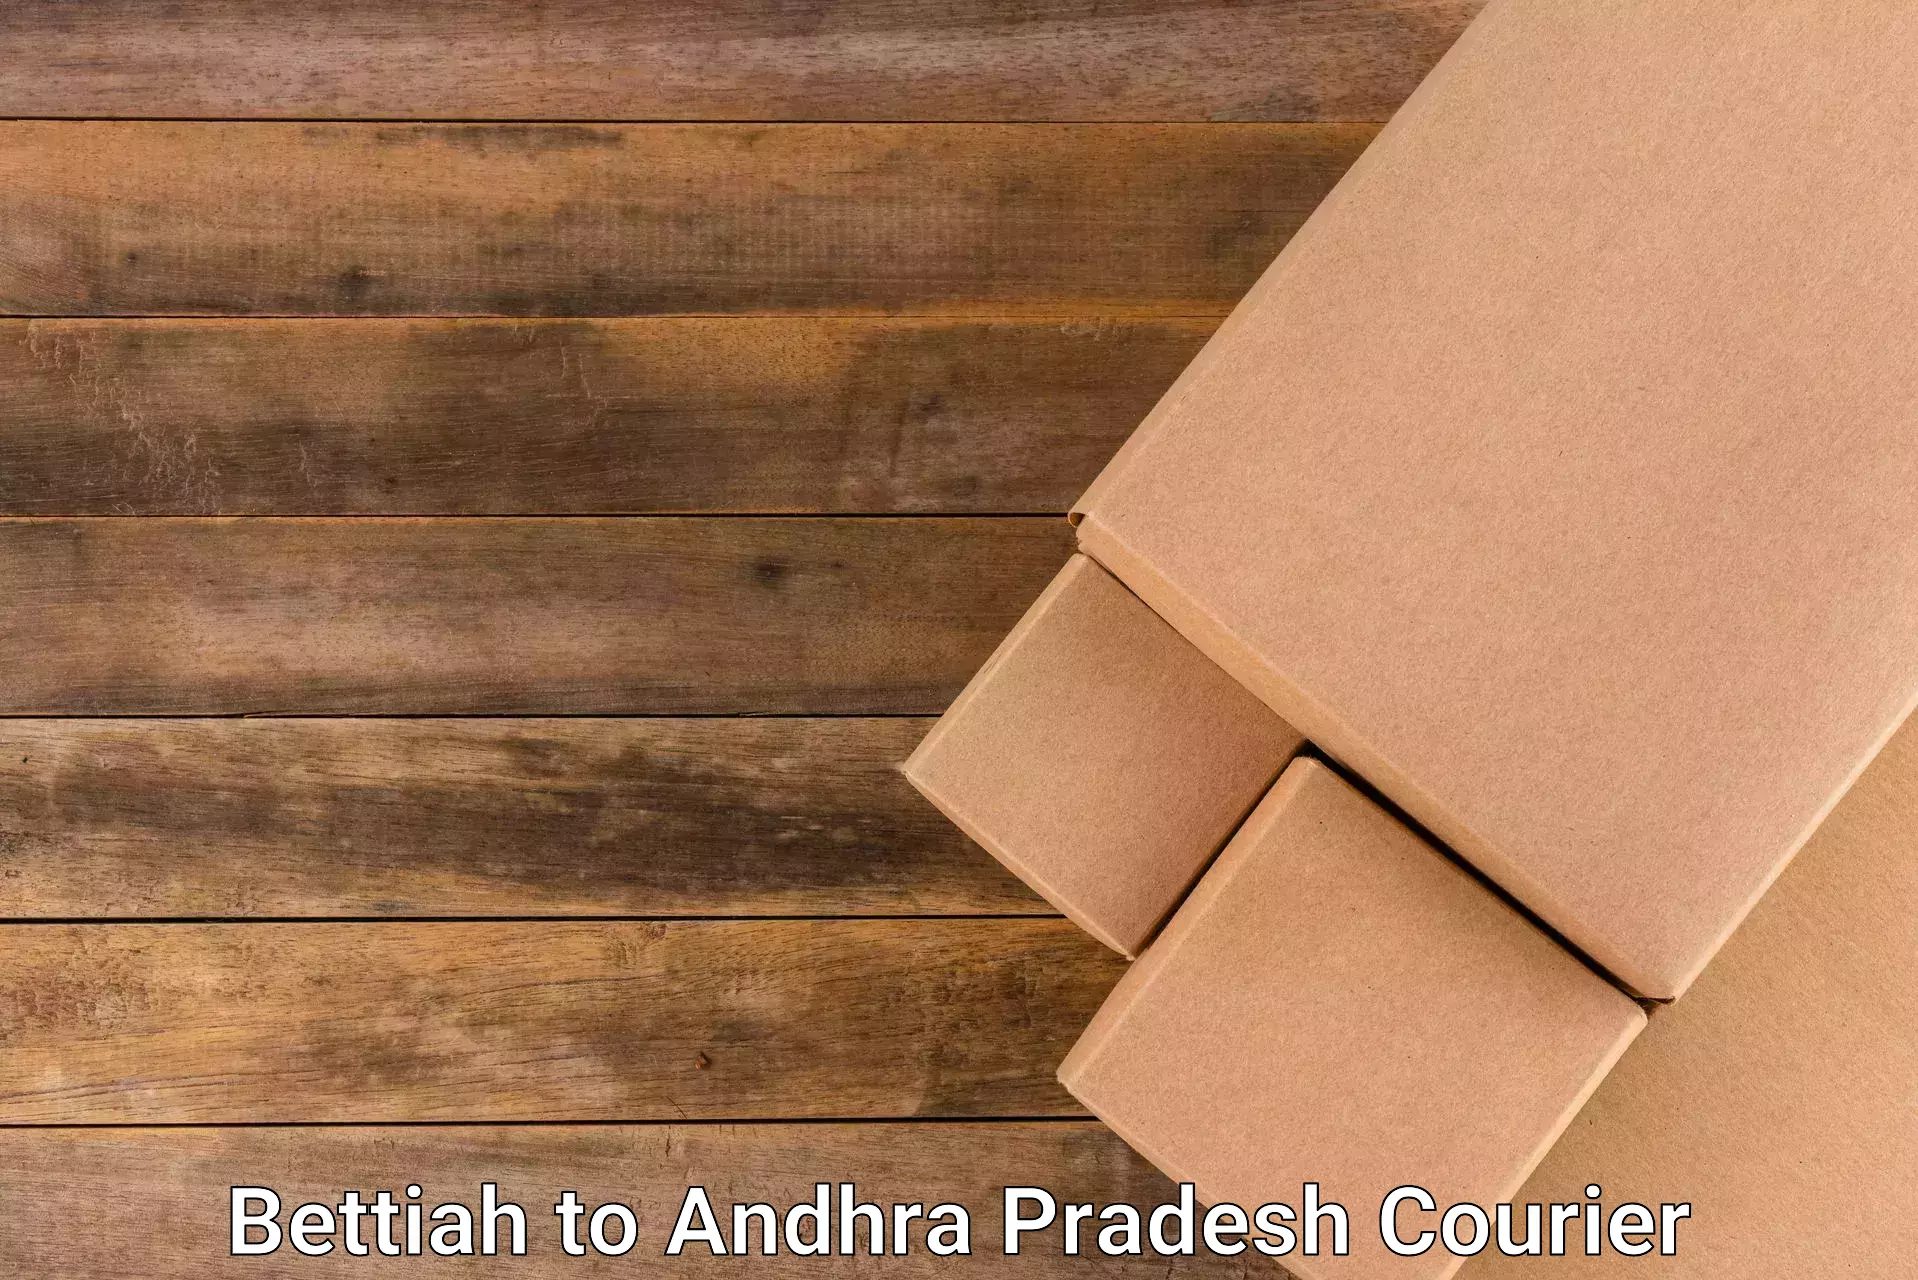 Courier service innovation Bettiah to Andhra Pradesh